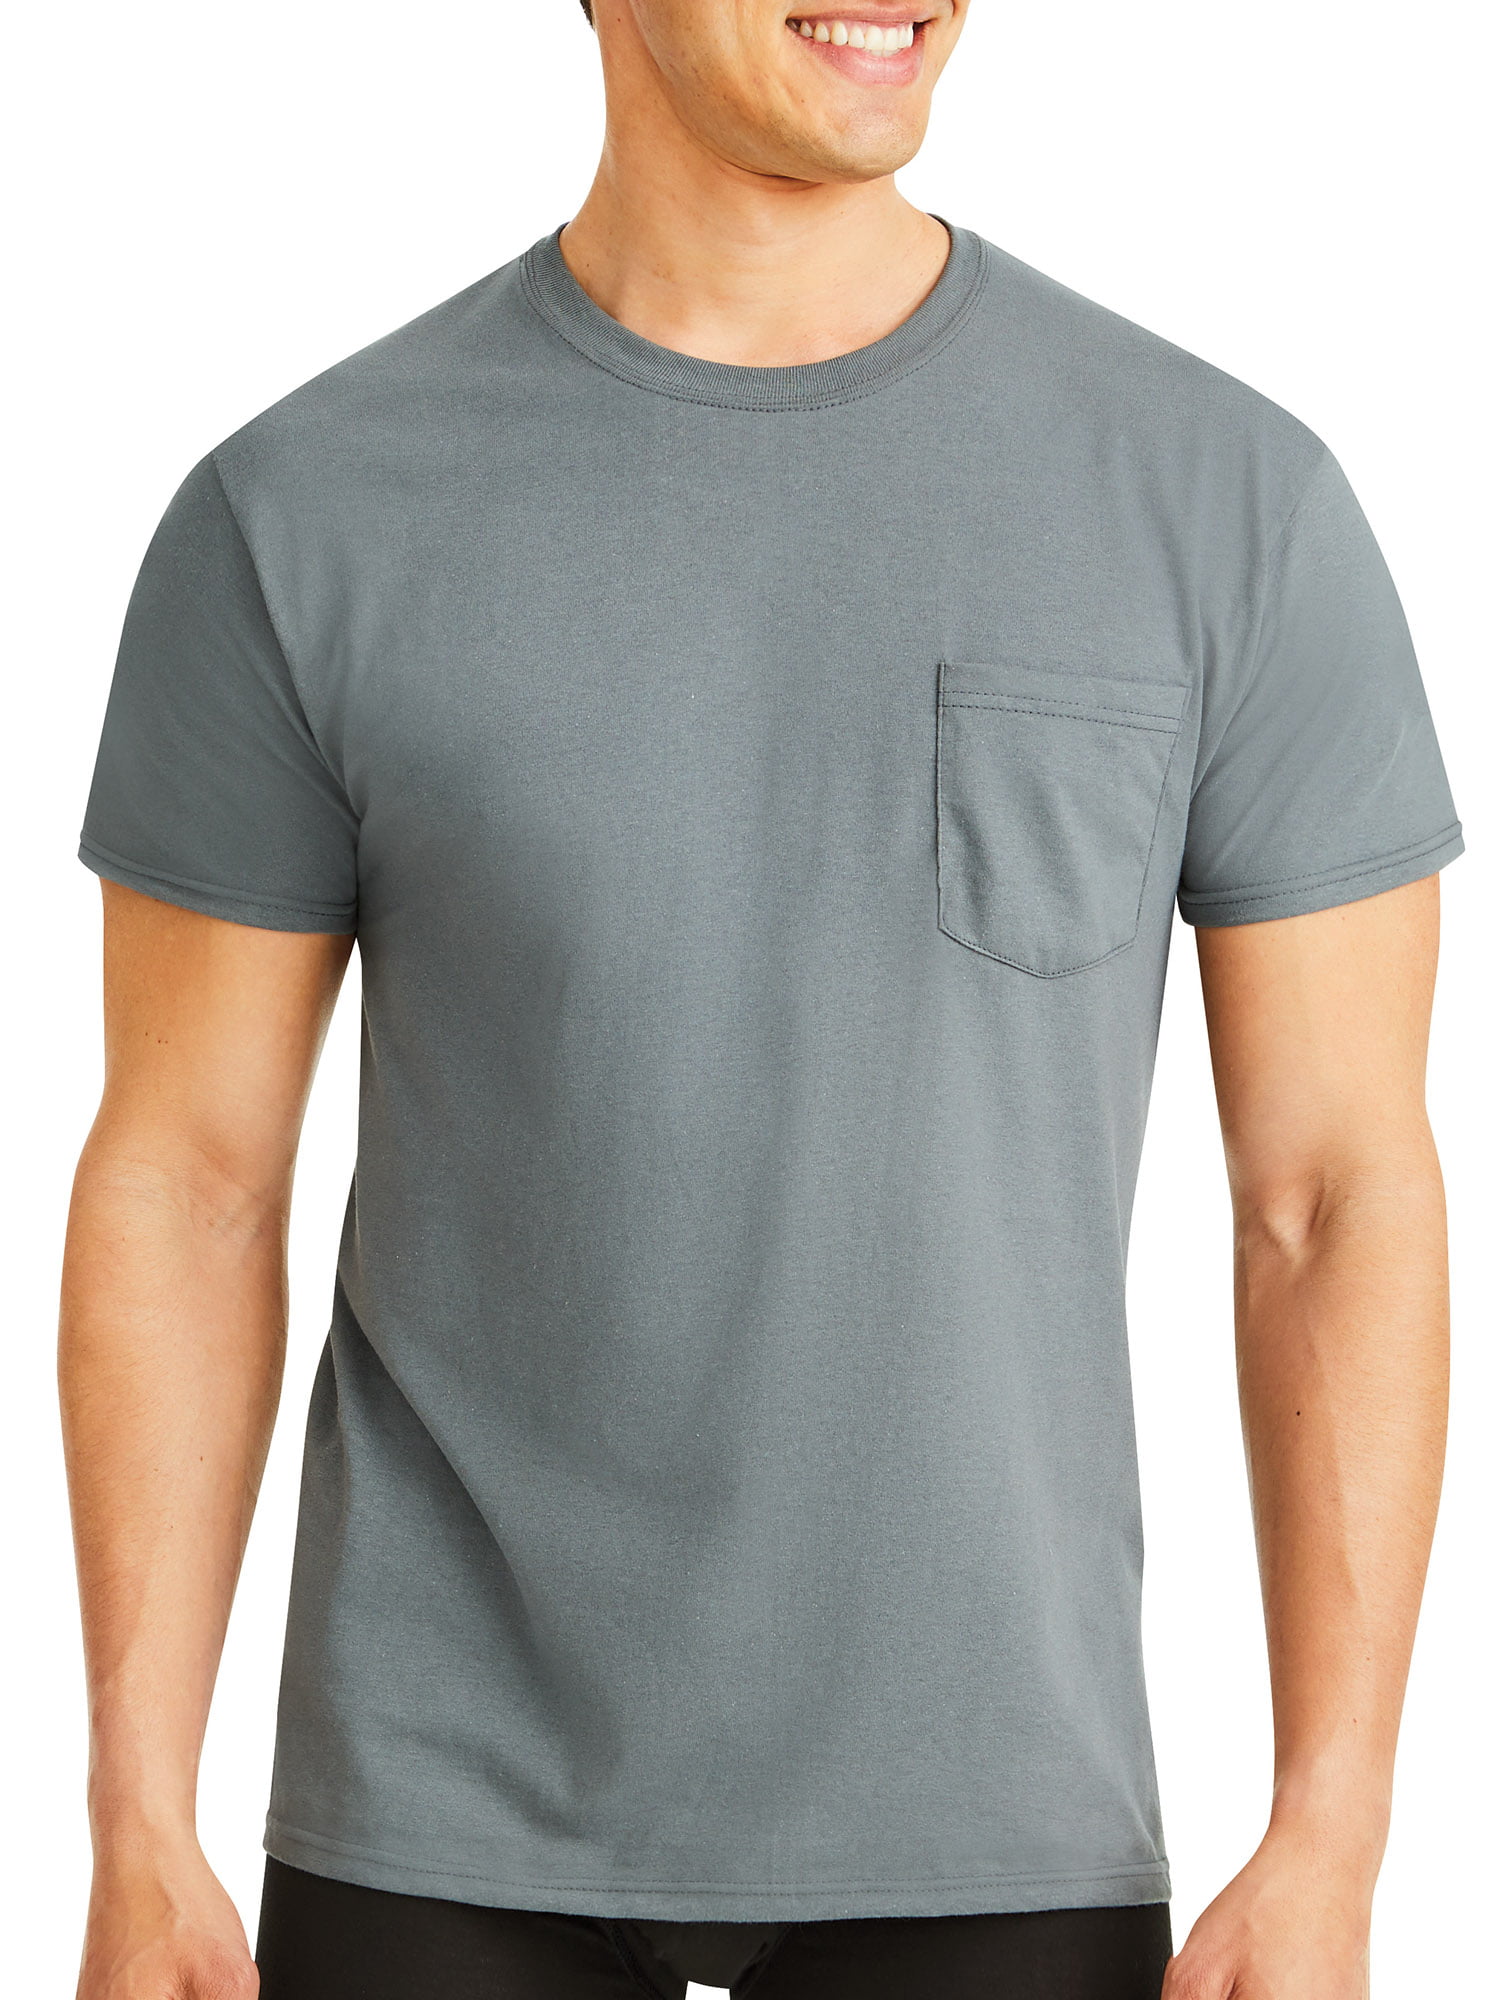 Hanes - Hanes Big & Tall Men's ComfortSoft Tagless Pocket T-Shirt 6 ...